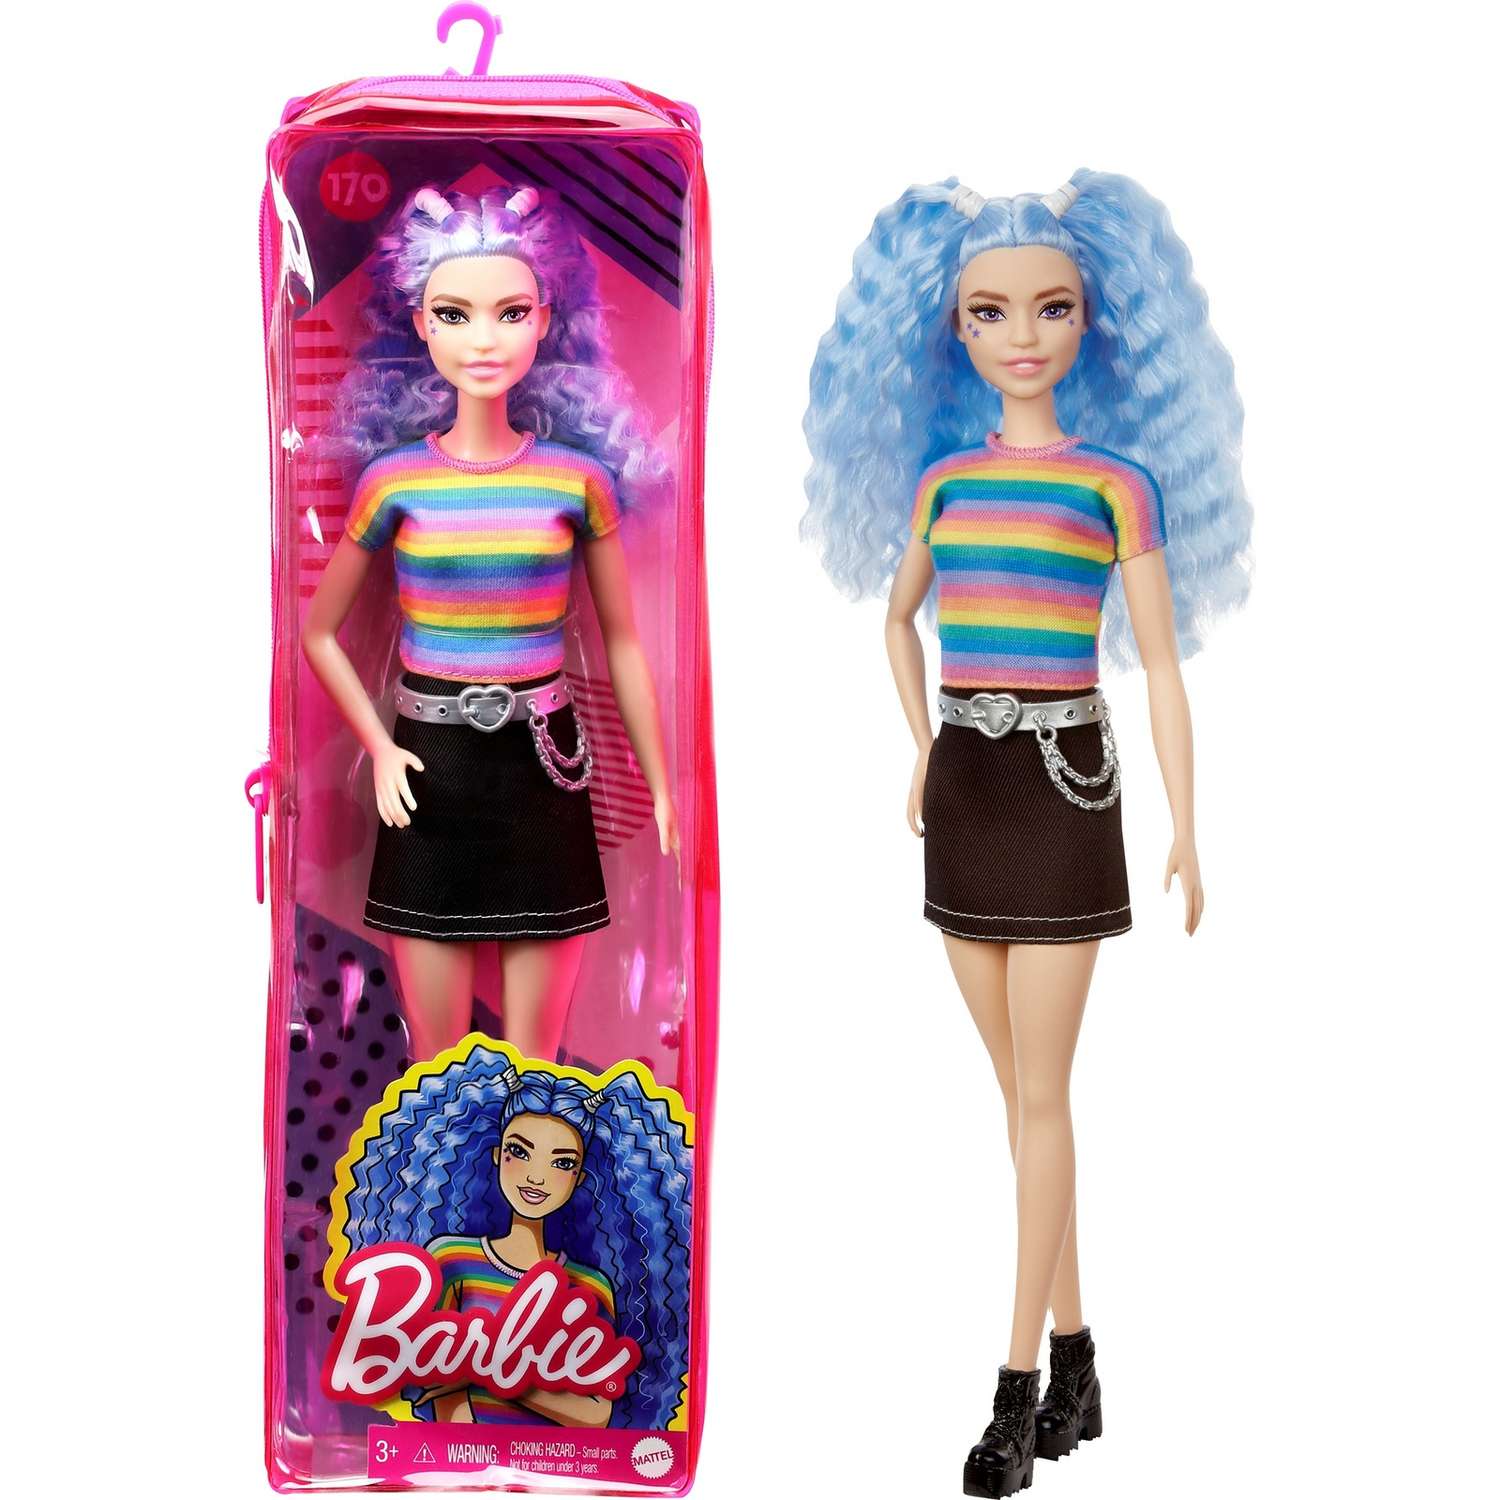 Кукла Barbie Игра с модой 170 GRB61 FBR37 - фото 11